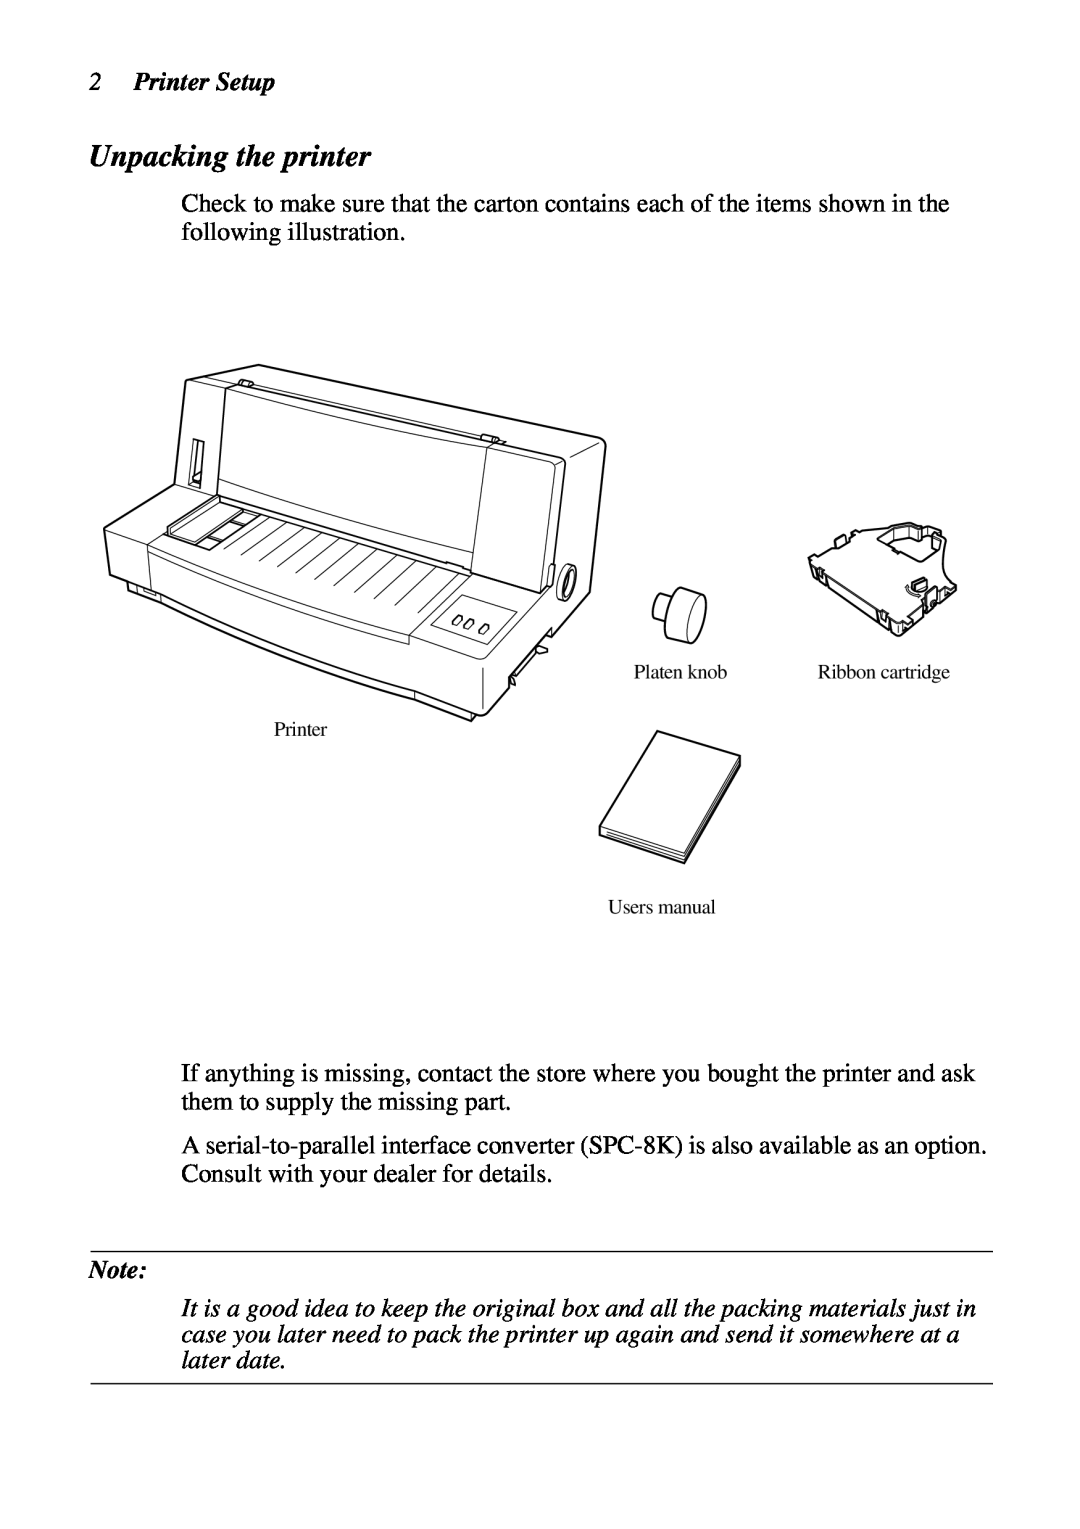 Star Micronics LC-6211 user manual Unpacking the printer, Printer Setup 